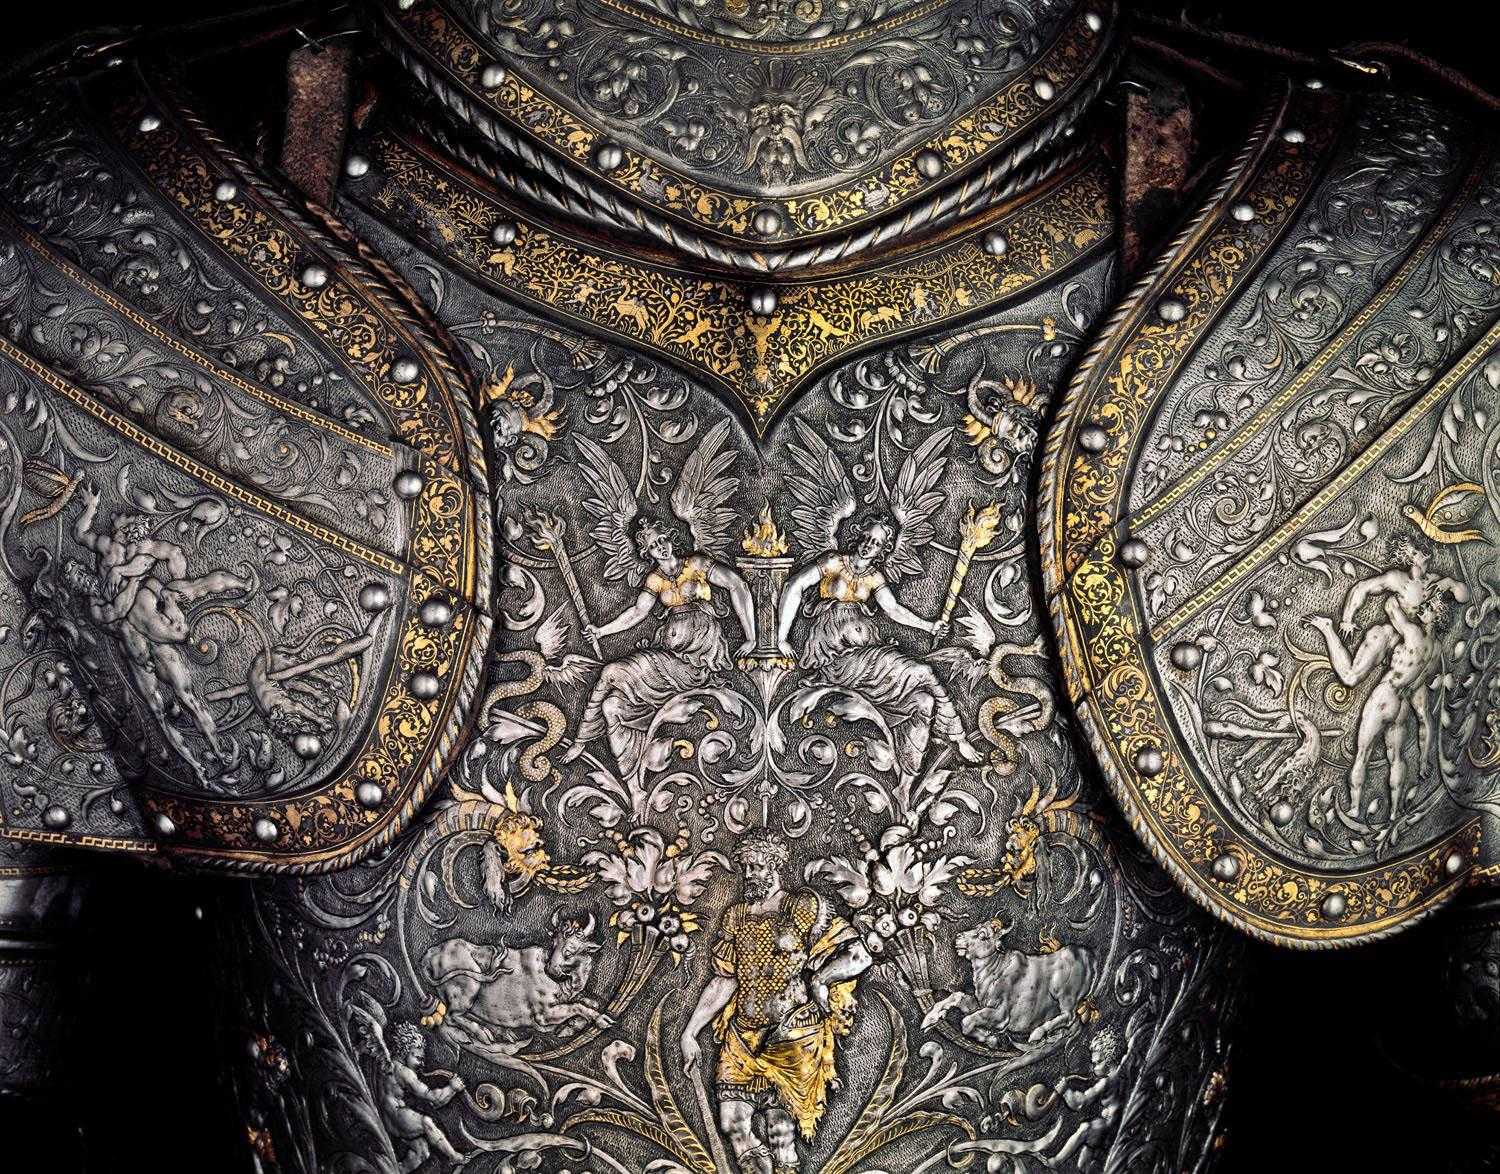 the hercules armor of the emperor maximilian ii